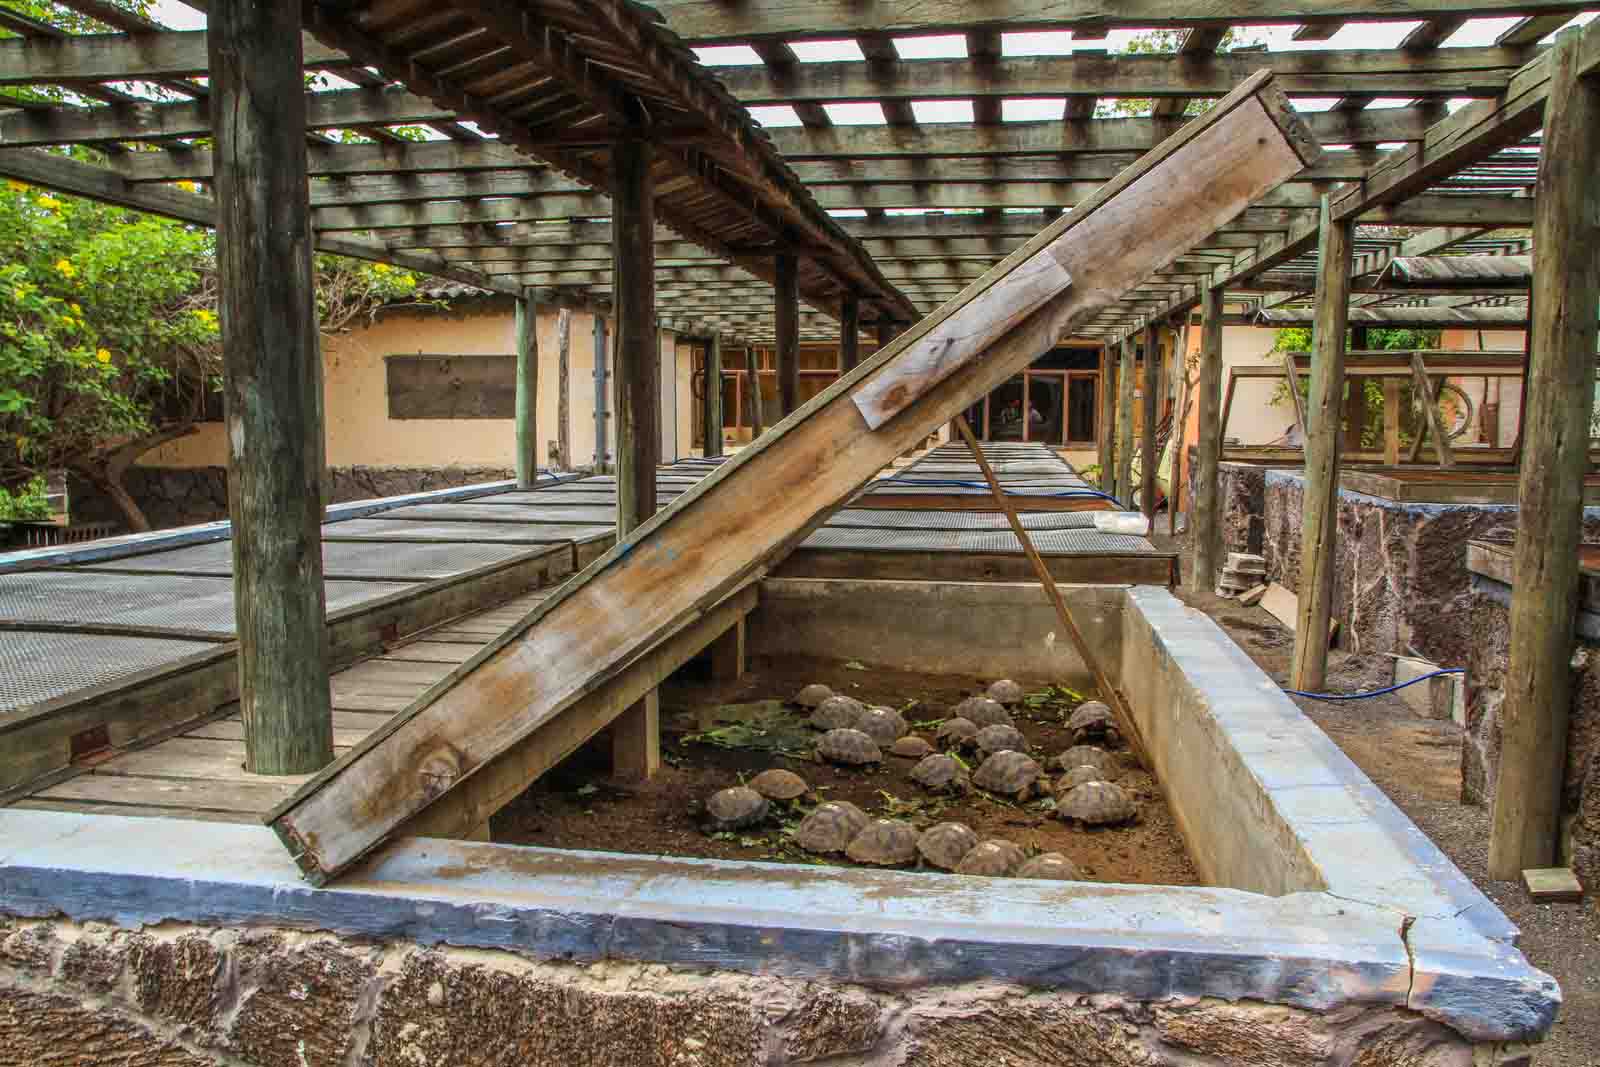 Breeding station for galapagos tortoises